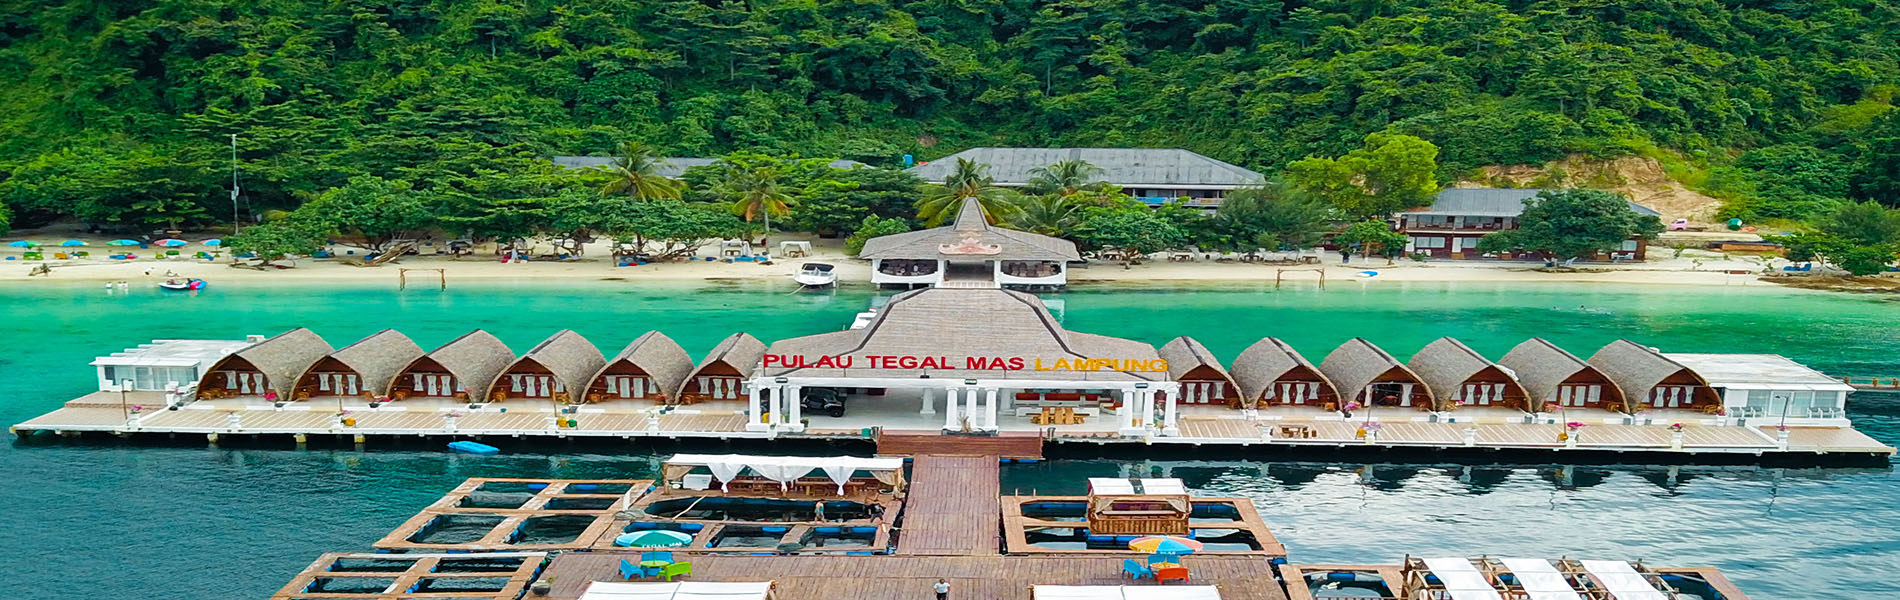 Paket Pulau Tegal Mas Villa New Lombok Laut (VIP) 2 Hari 1 Malam